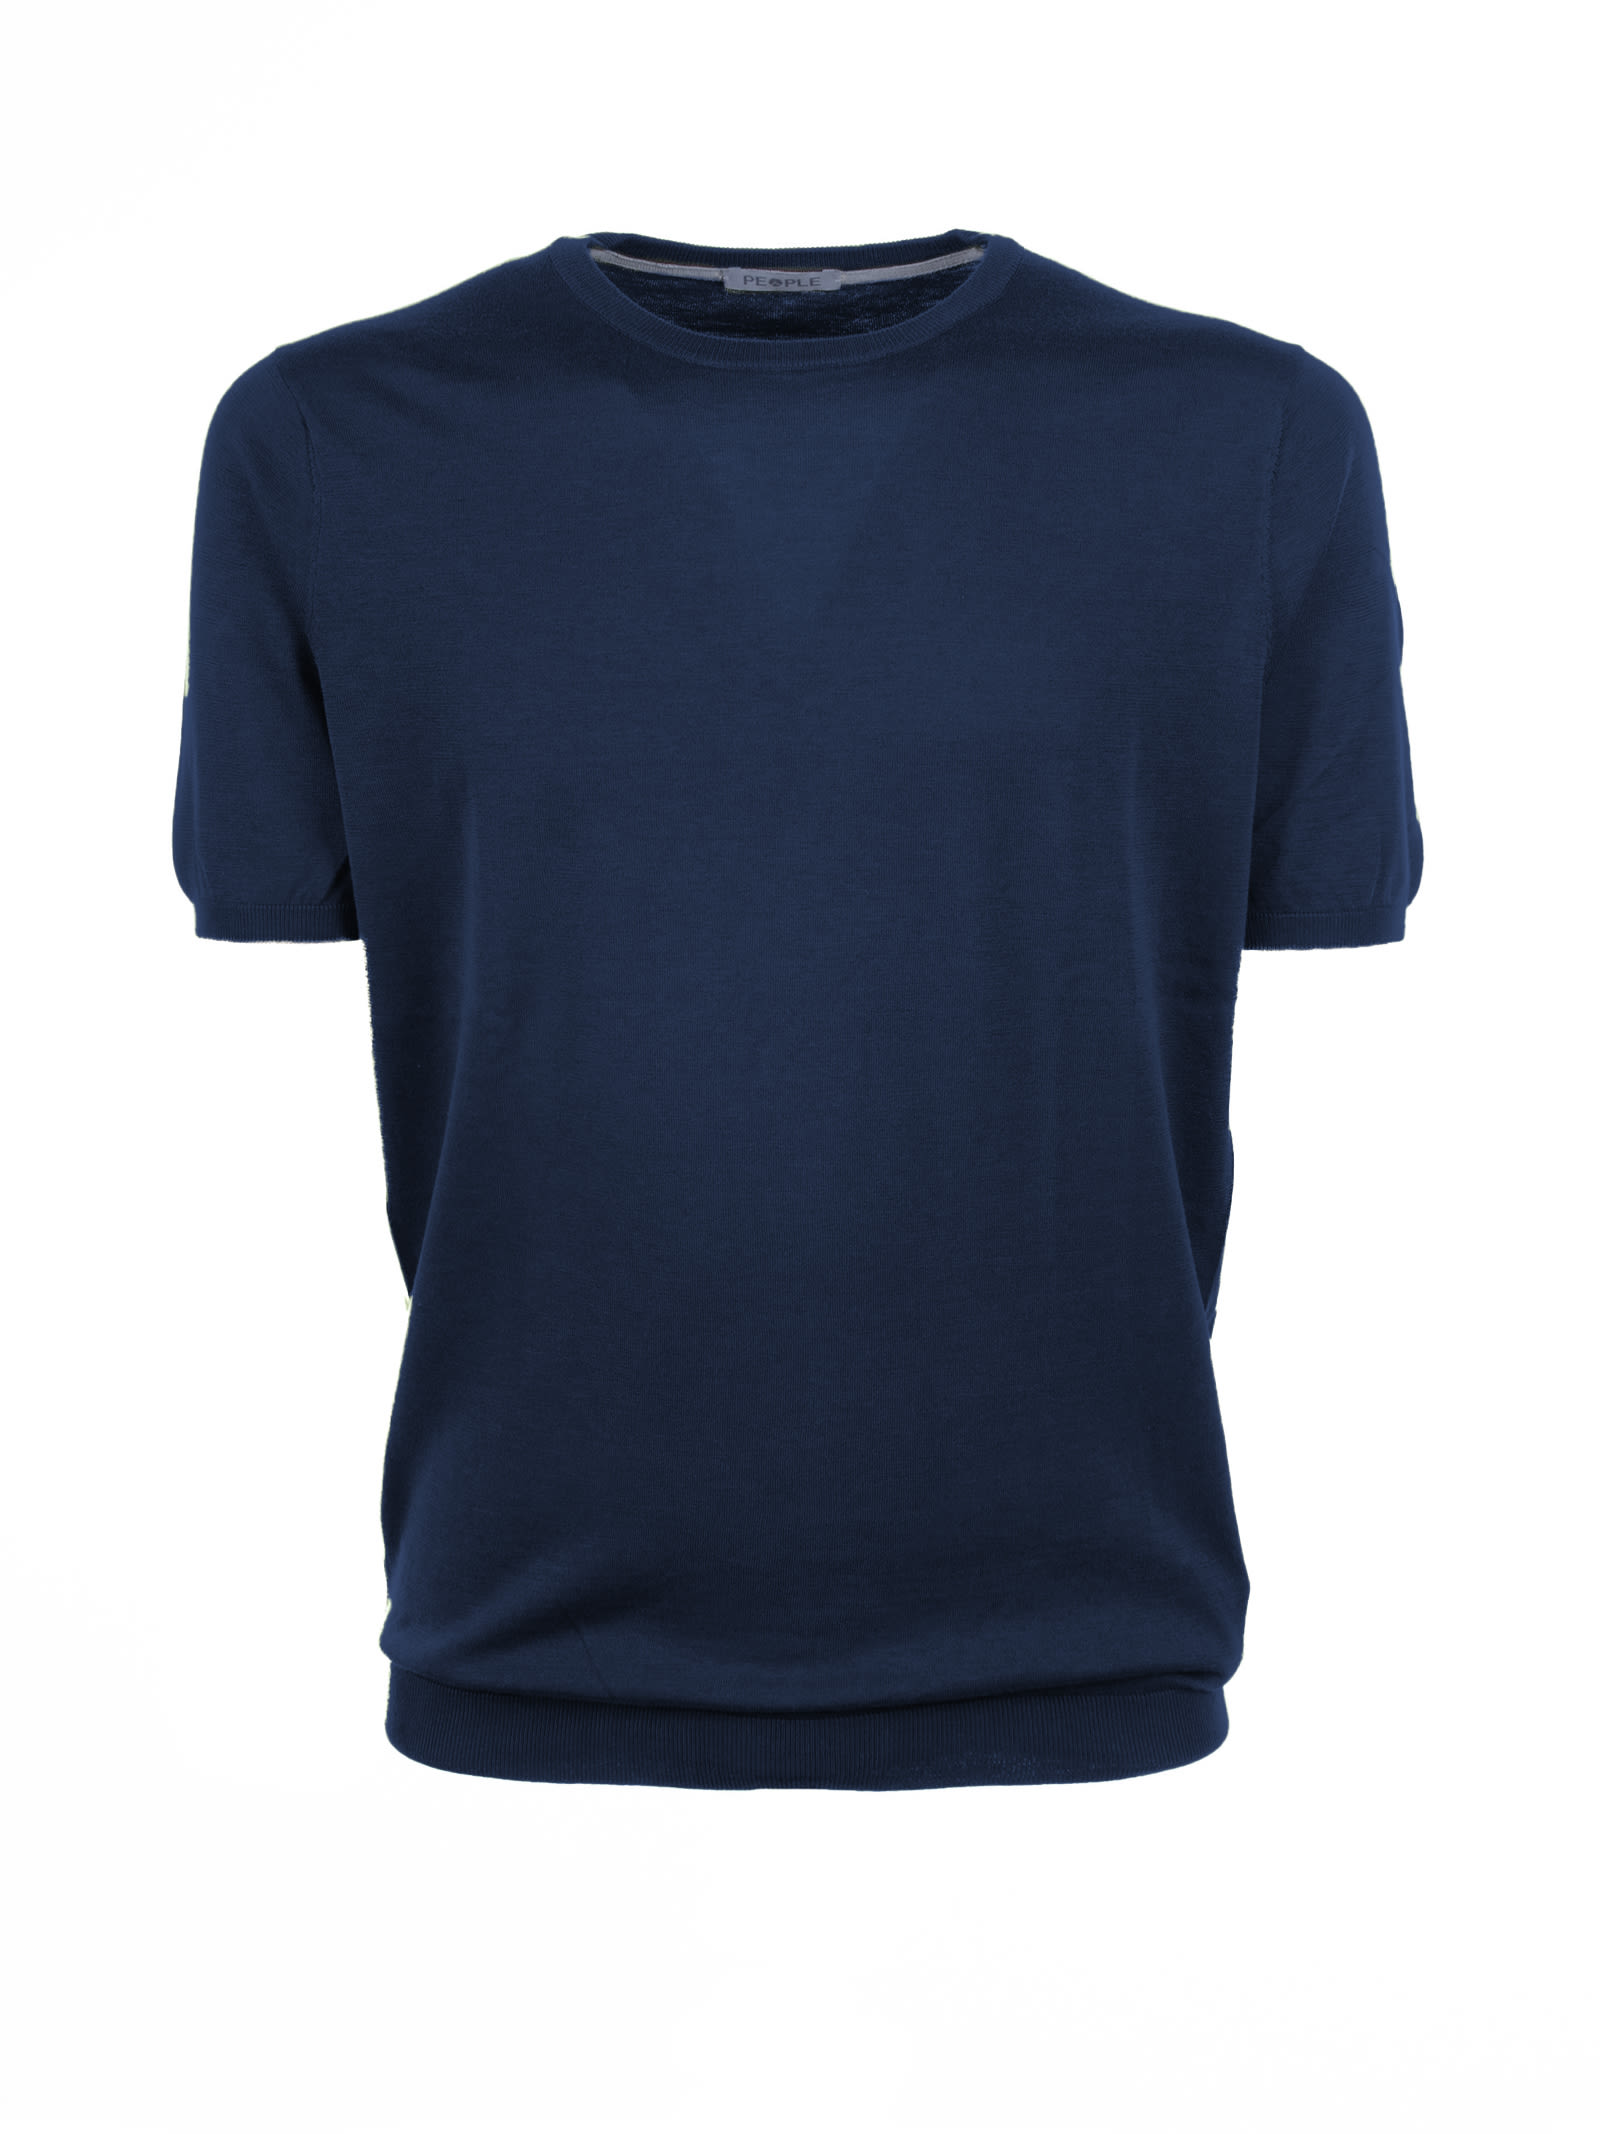 Blue Crew-neck T-shirt